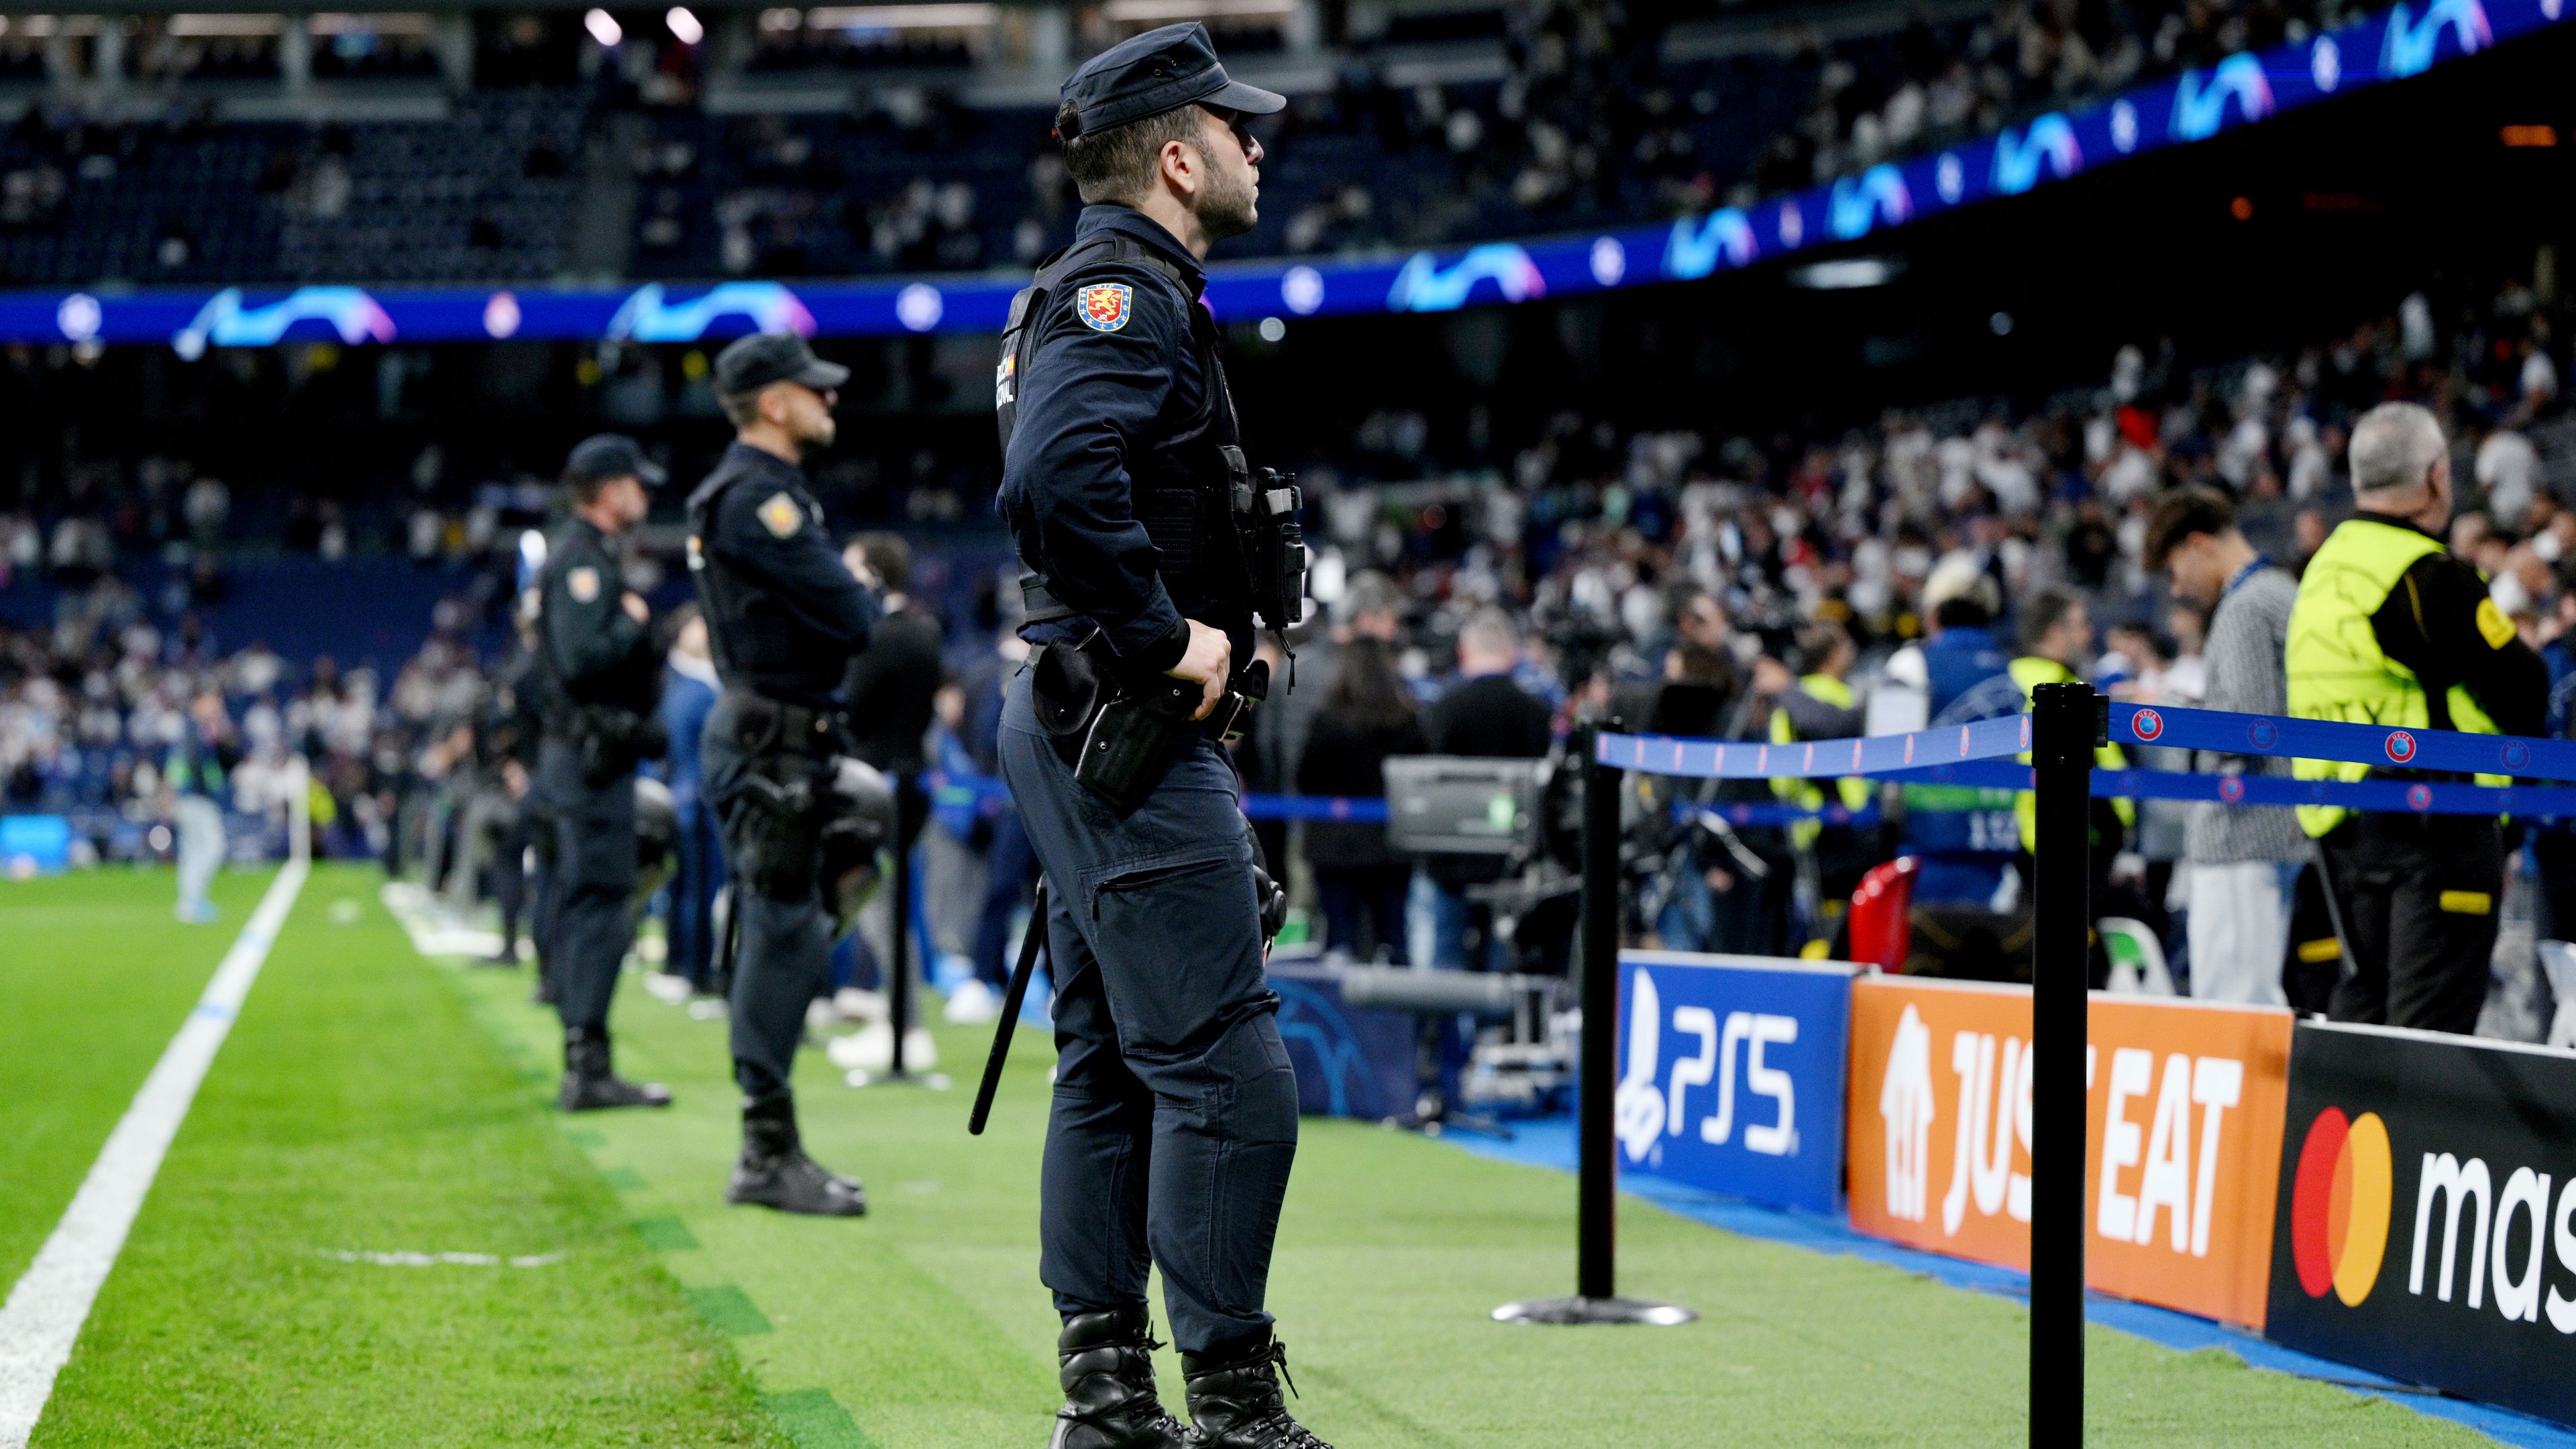 A police officer inside the Estadio Santiago Bernabeu in Madrid.